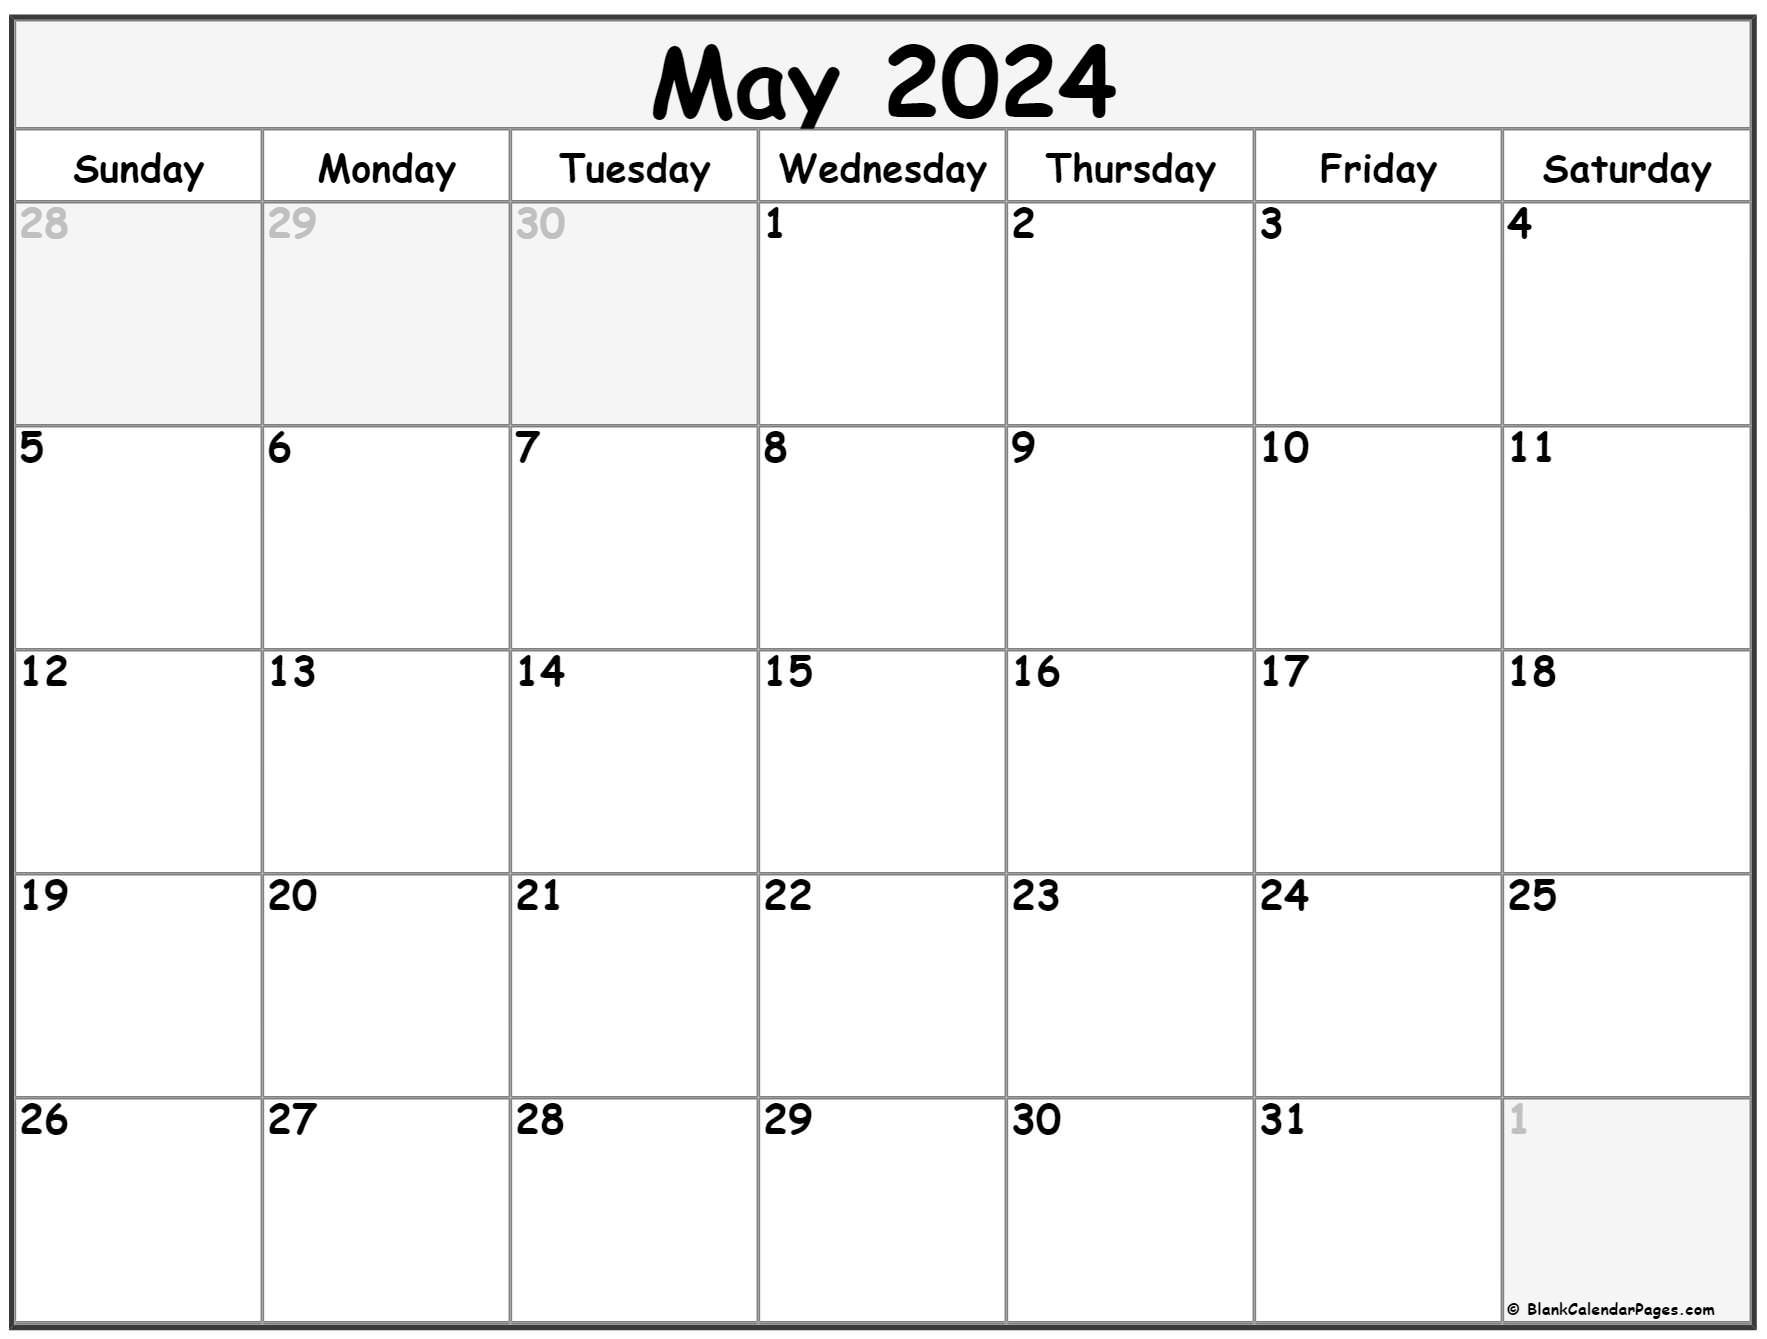 May 2022 calendar | free printable monthly calendars